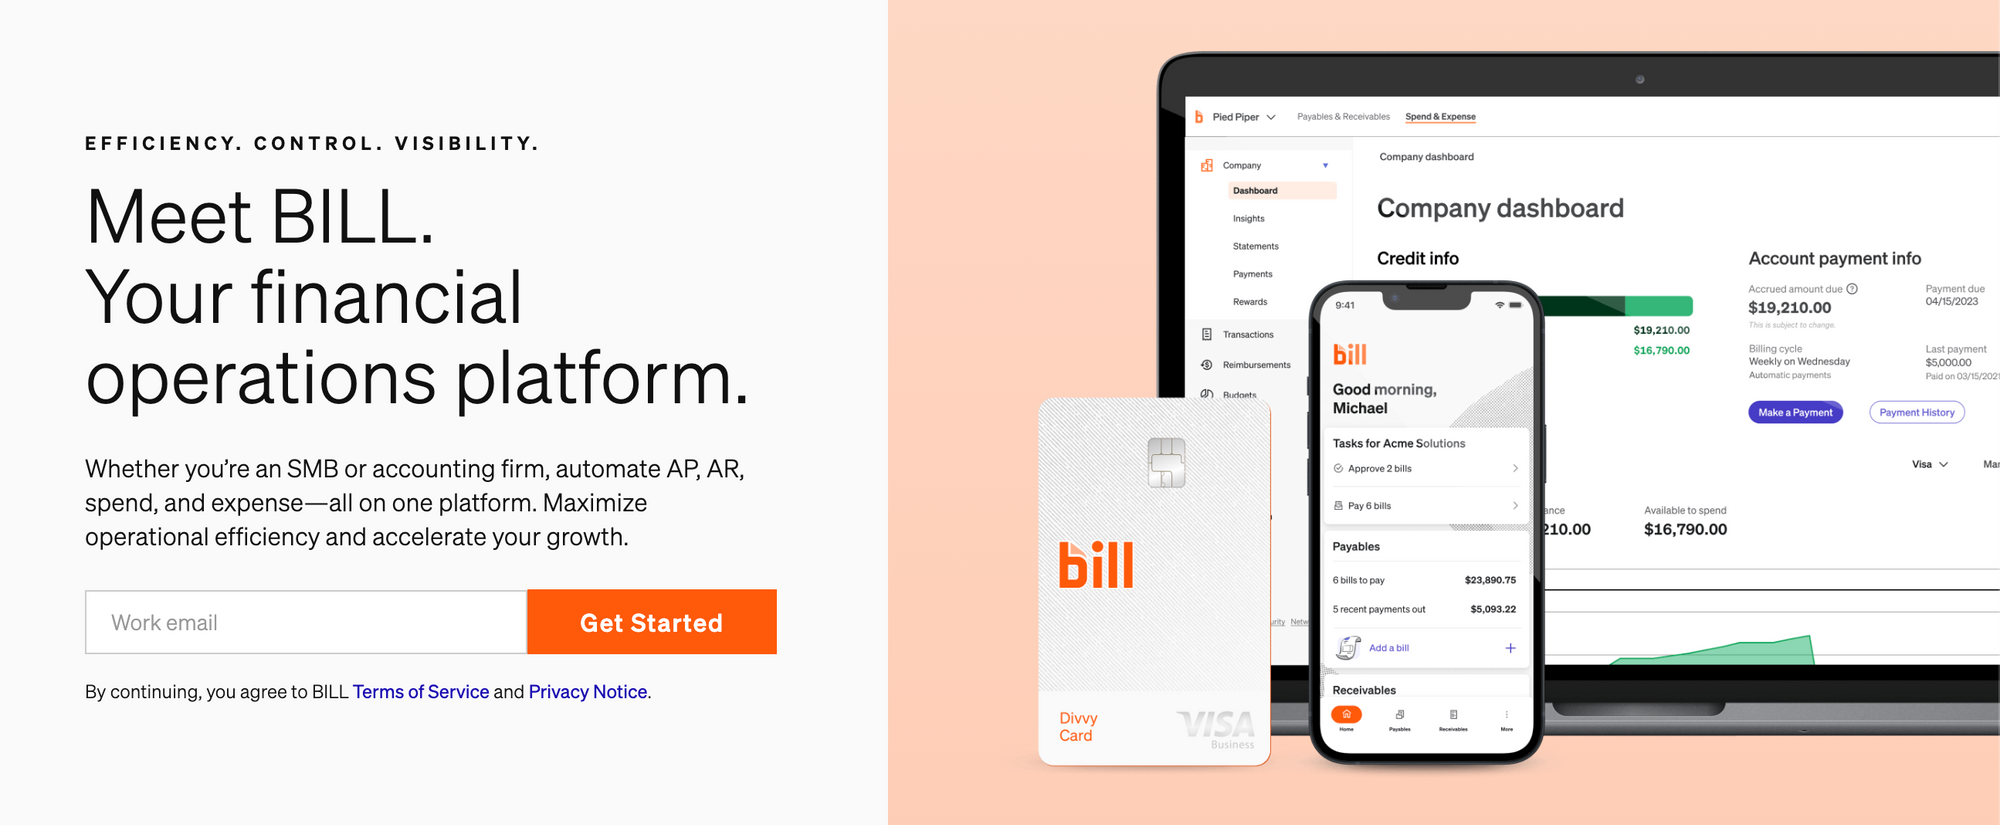 screenshot of the bill.com website